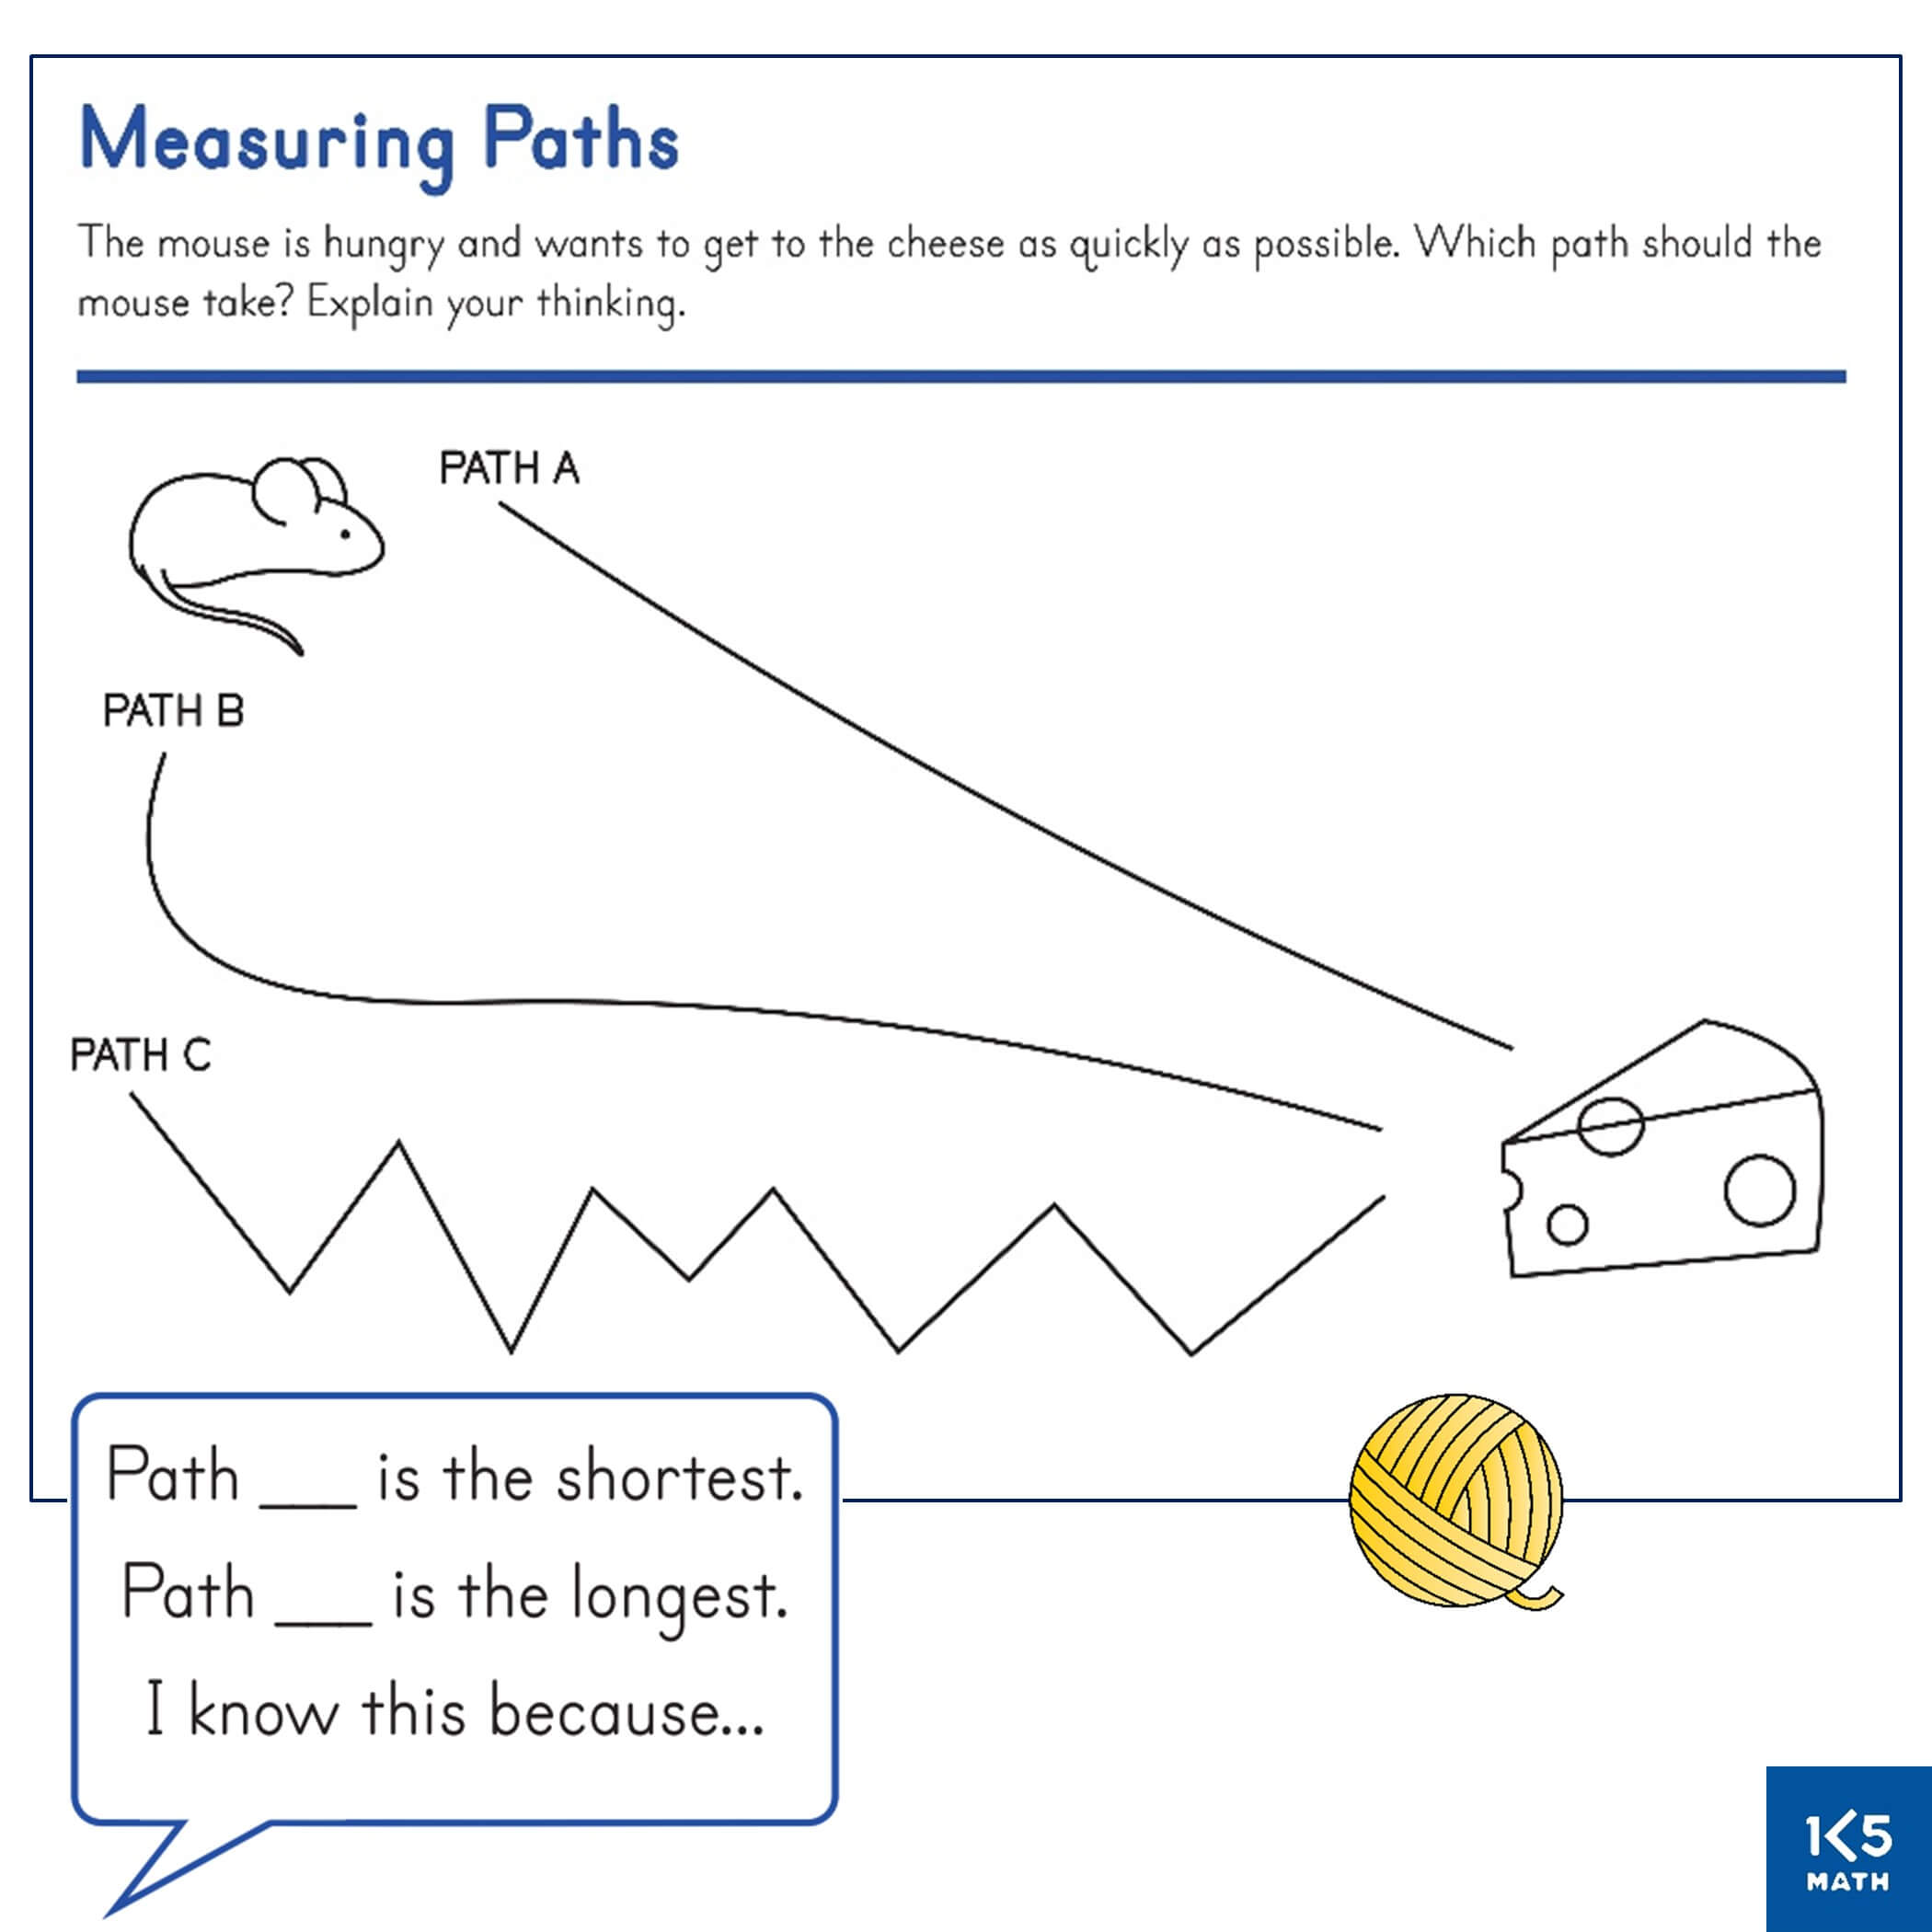 Measuring Paths